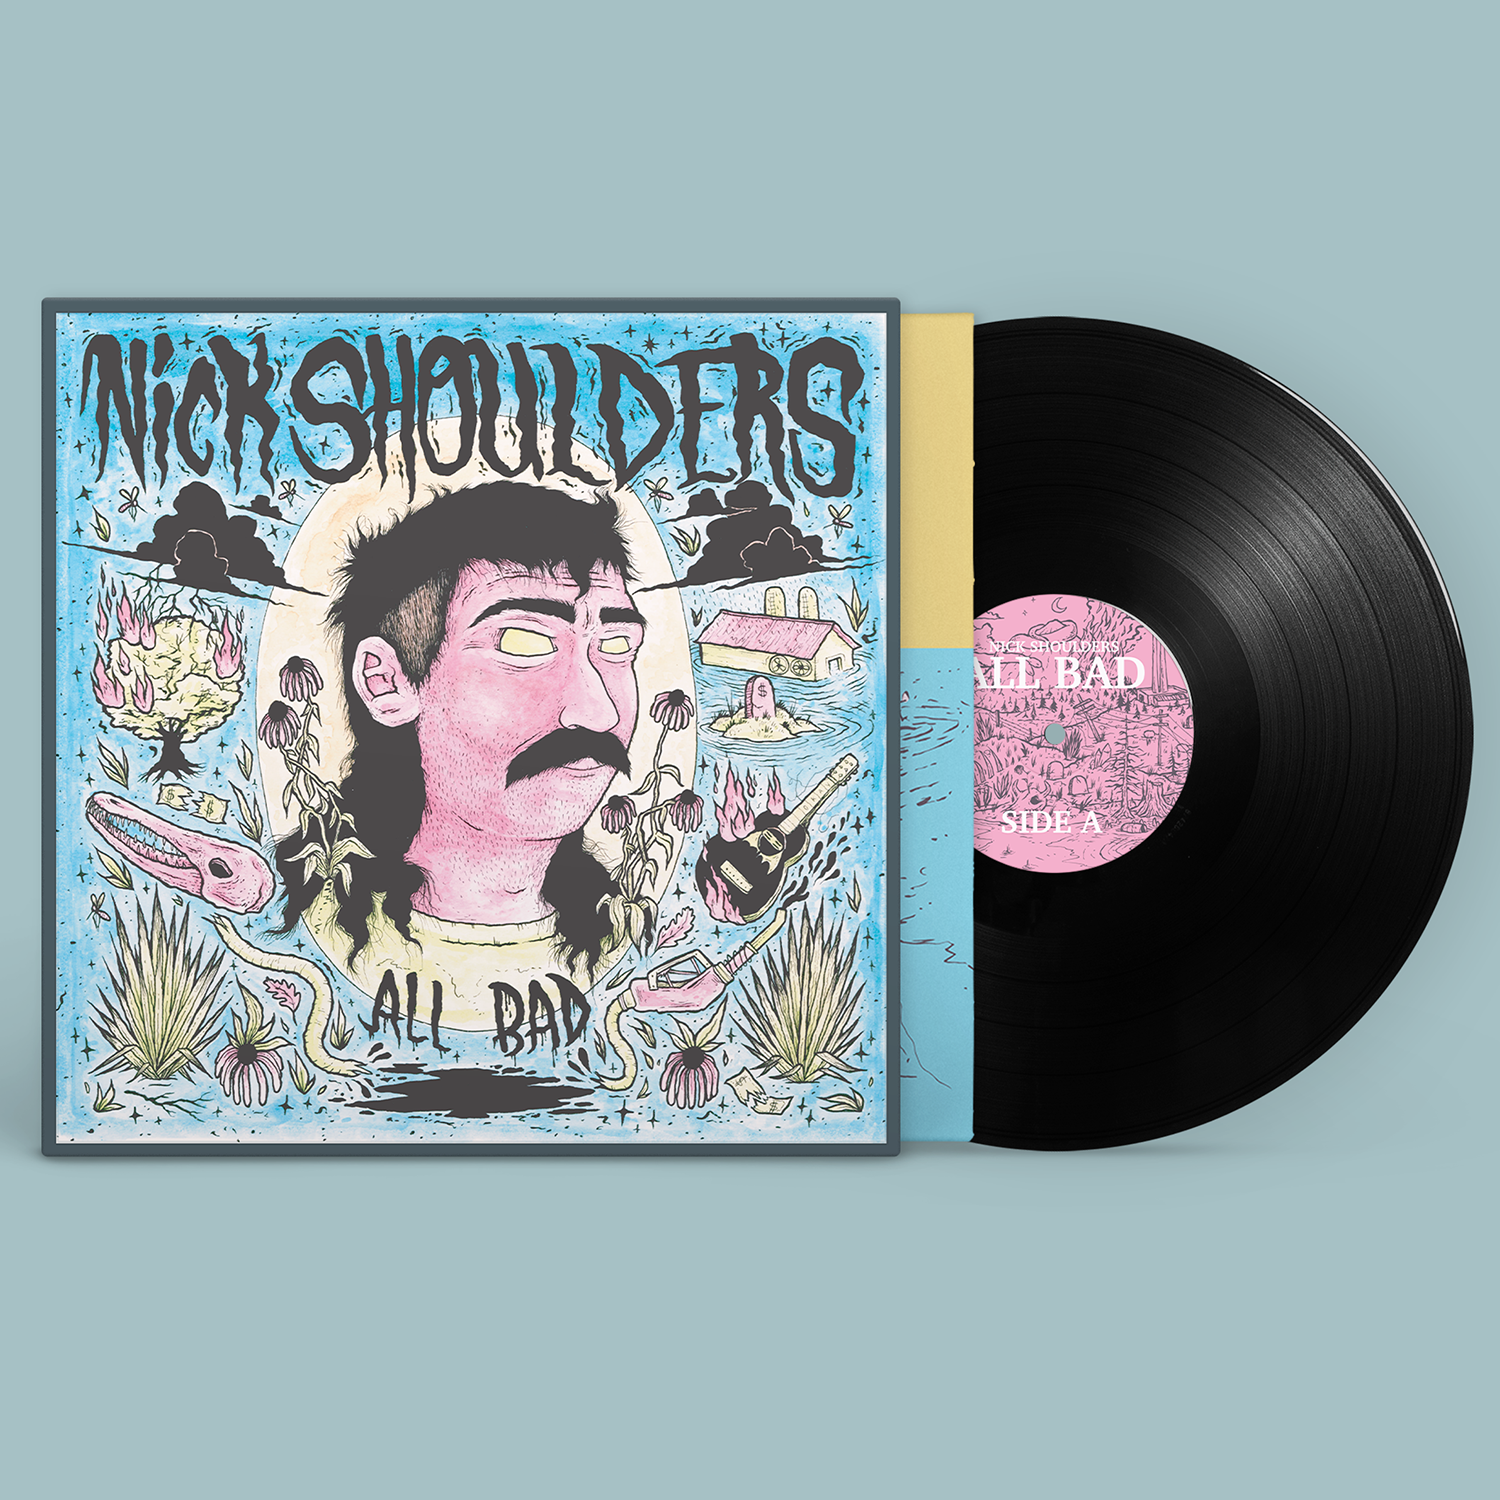 Nick Shoulders - "All Bad" 150g Black Vinyl